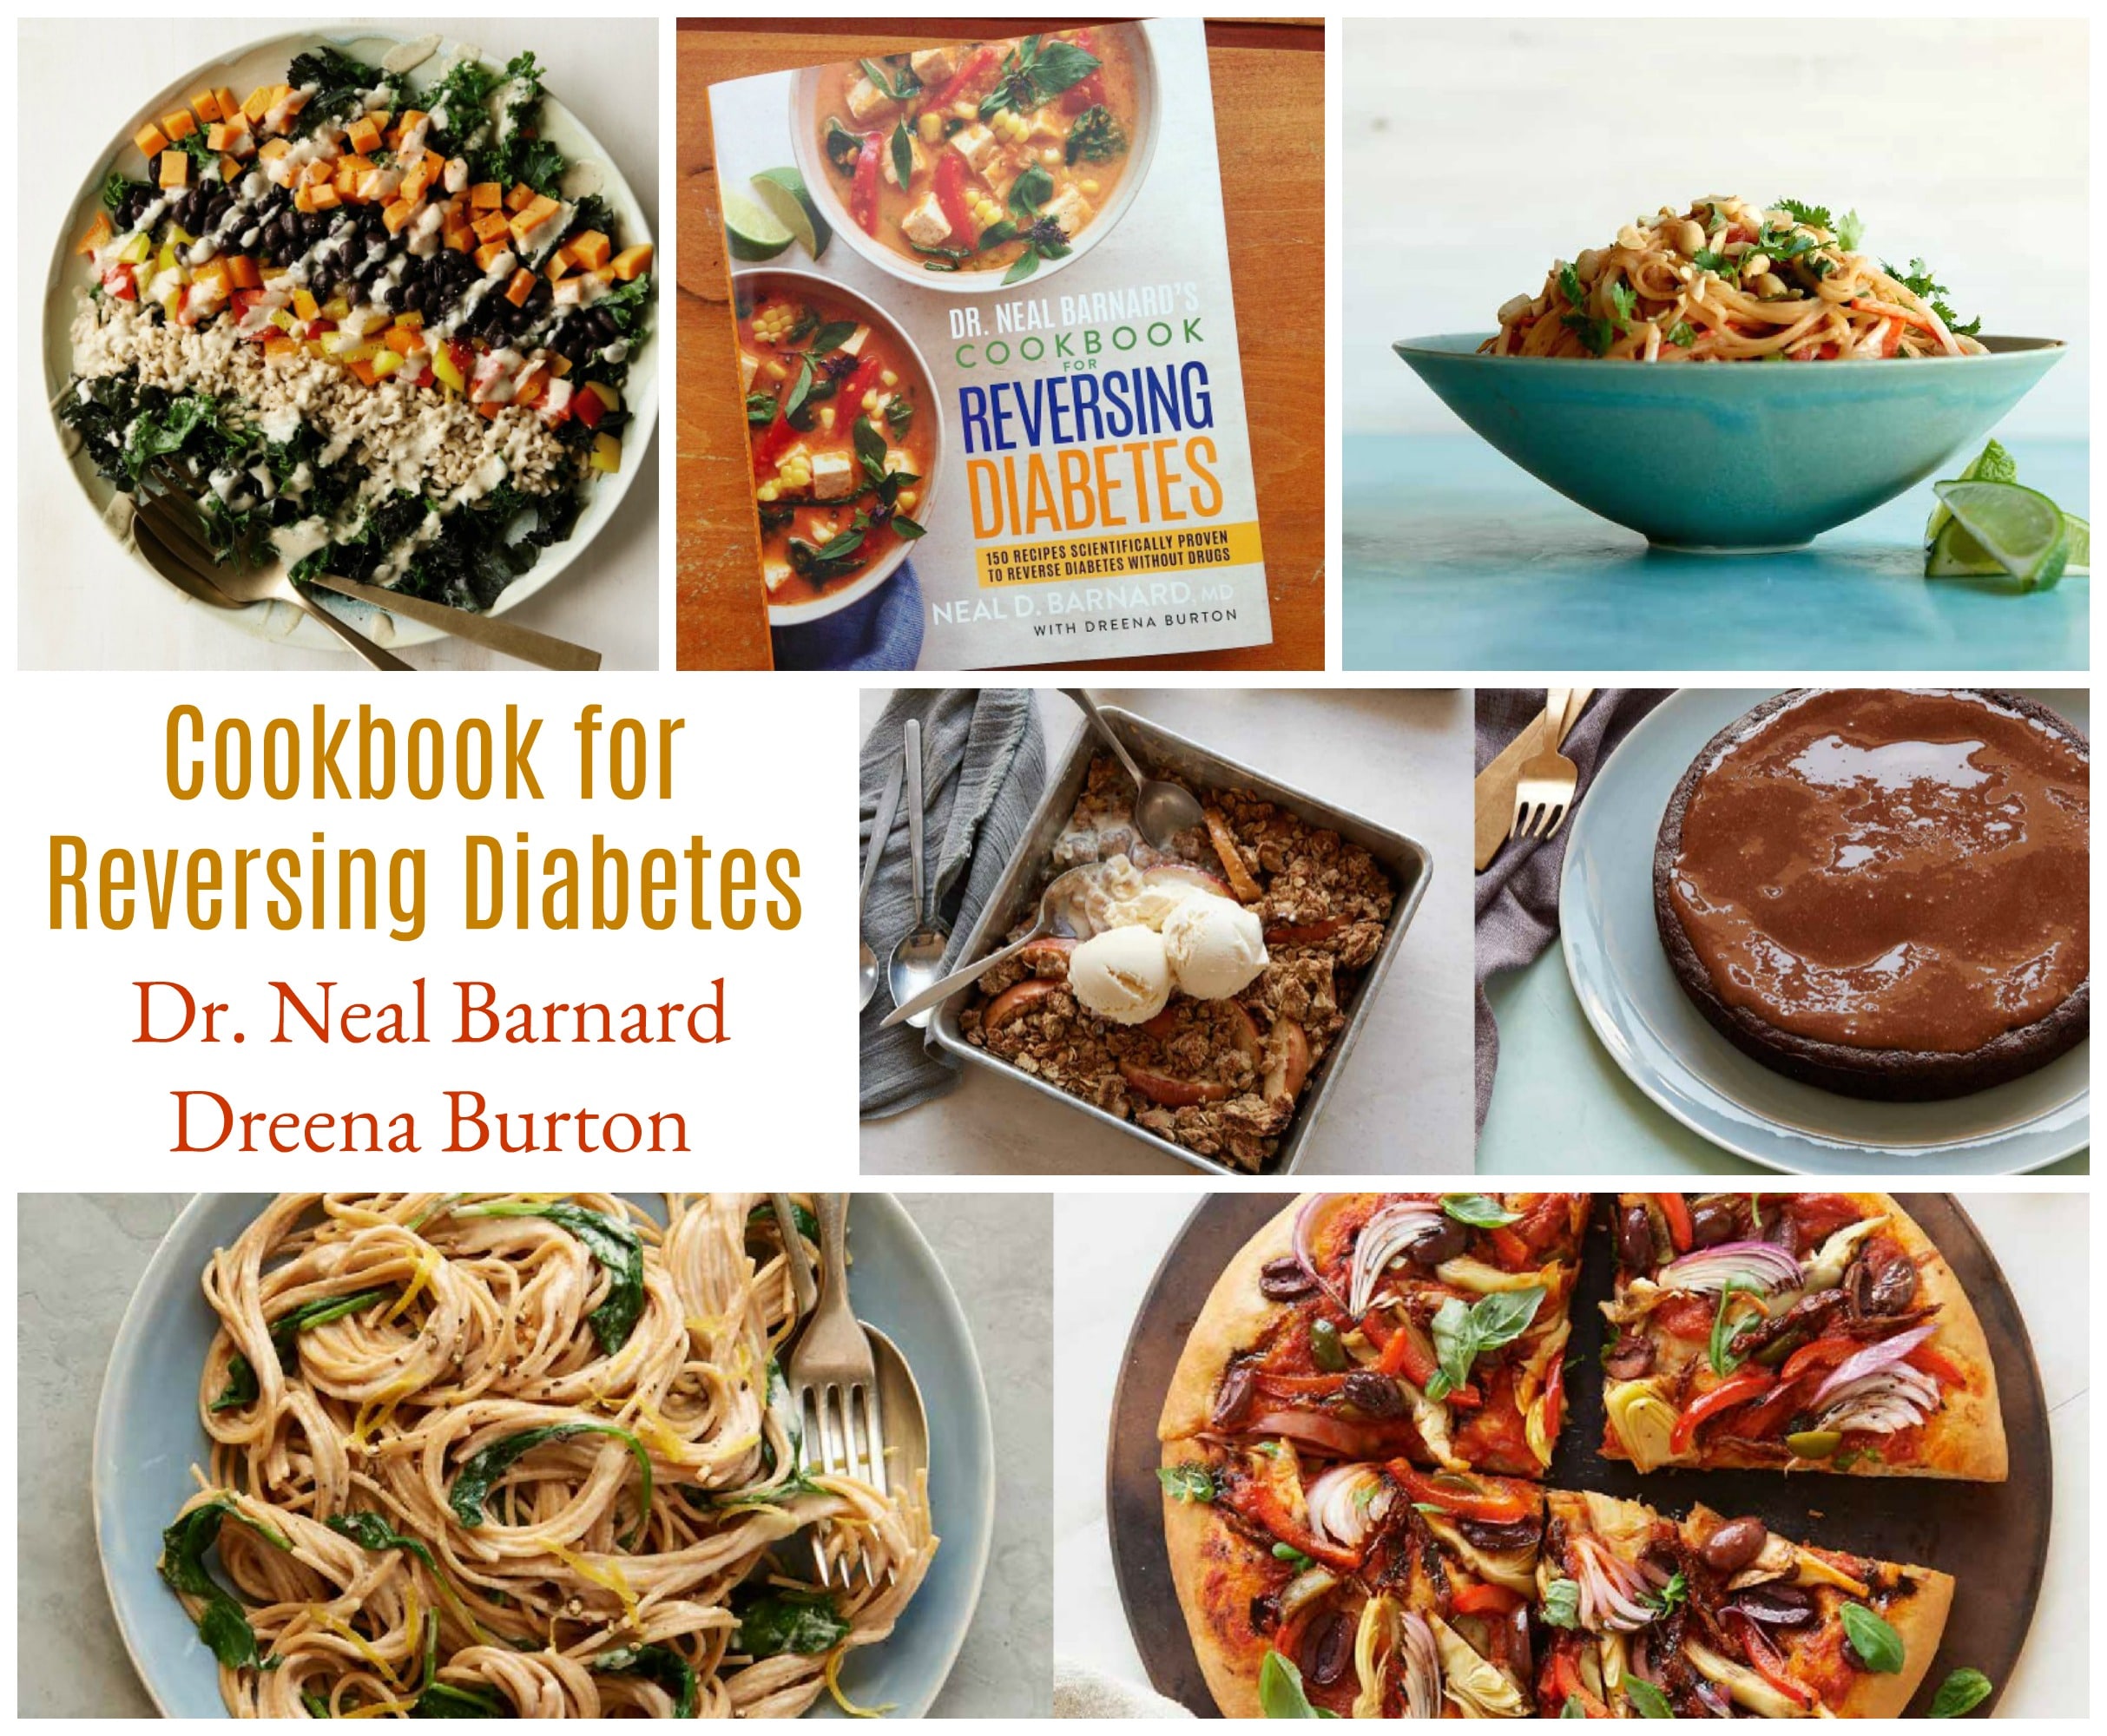 Cookbook for Reversing Diabetes by Dr. Neal Barnard and Dreena Burton #plantbased #vegan #oilfree #cookbook #recipes #type2diabetes #healthyrecipes #health #wholefoods #wfpb 